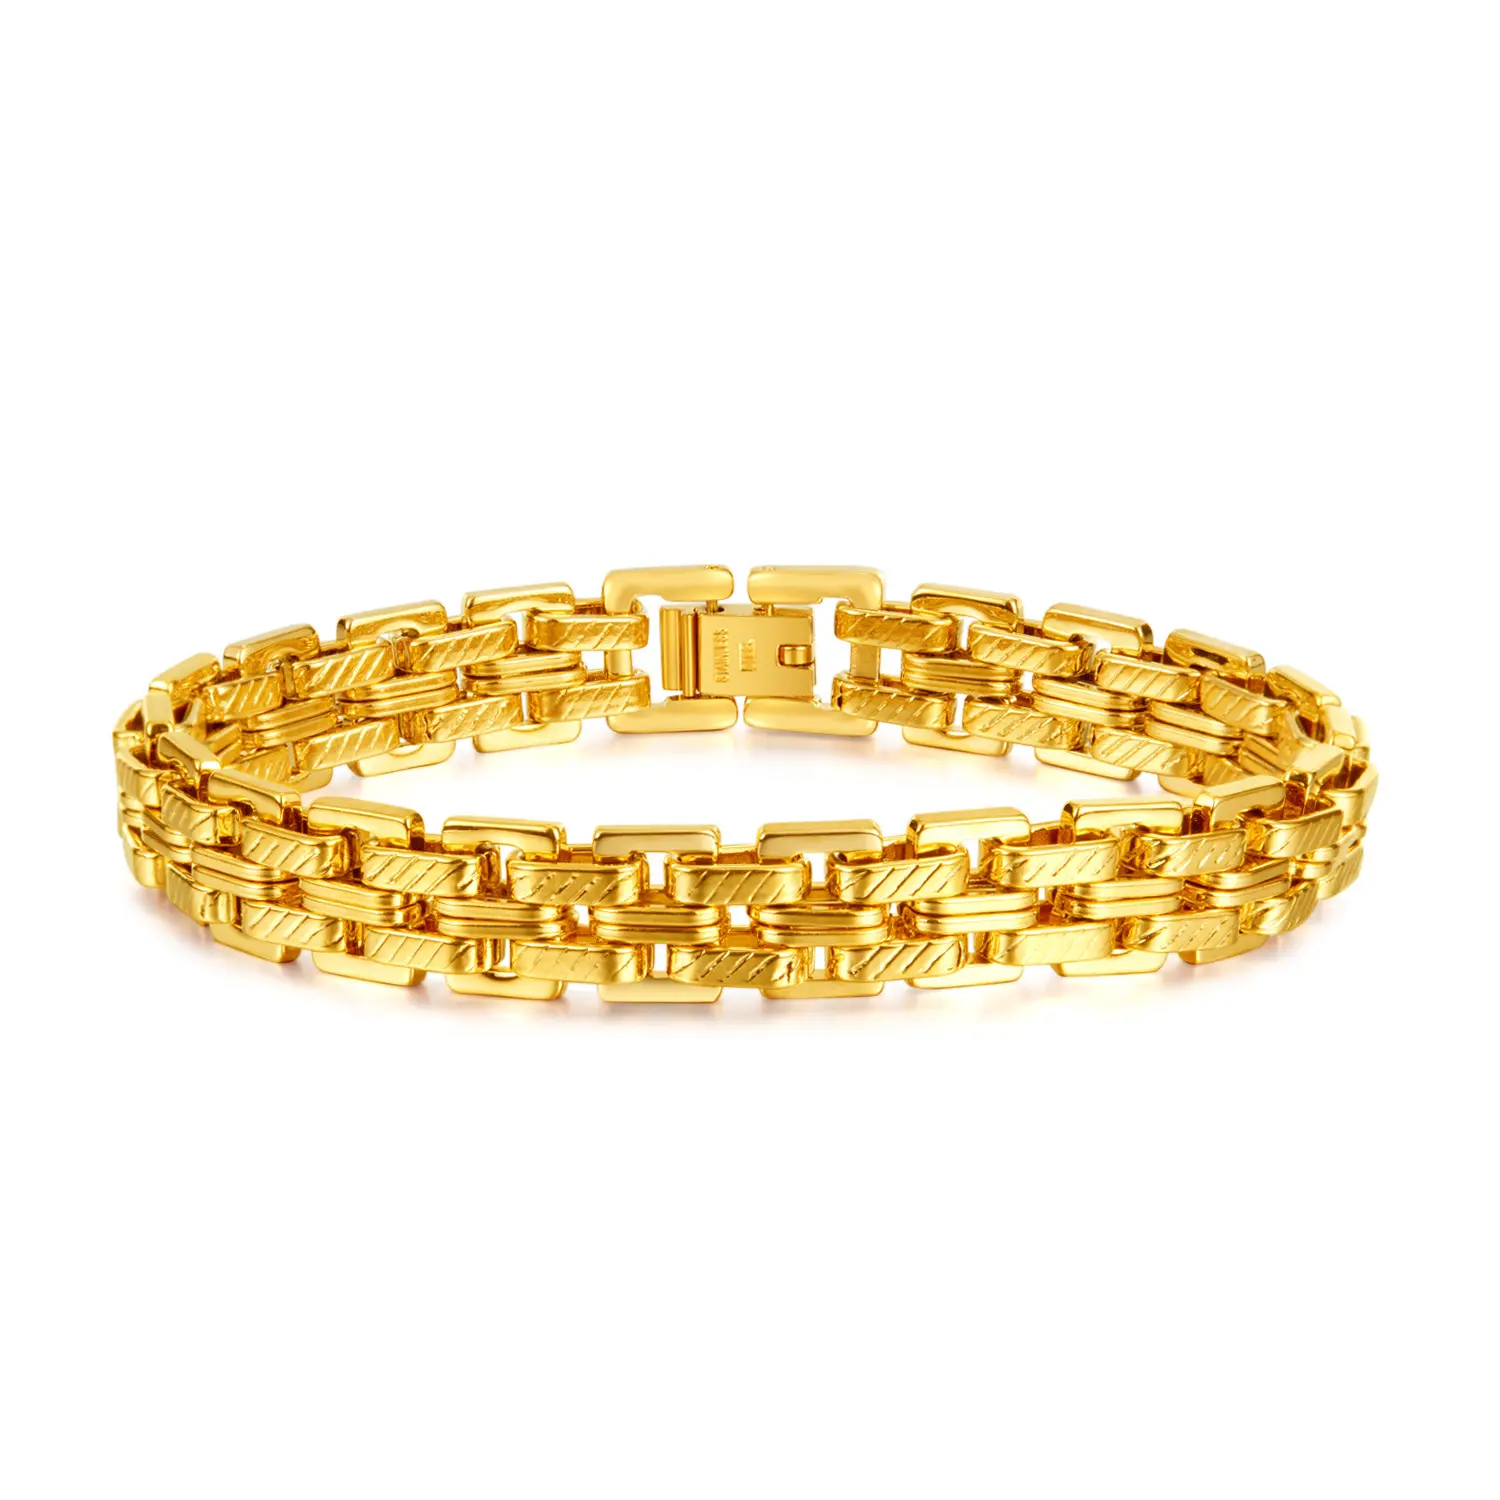 Luxus Damen Uhren armband Armband 18 Karat vergoldet Edelstahl Link Chain Armband Damen Armband